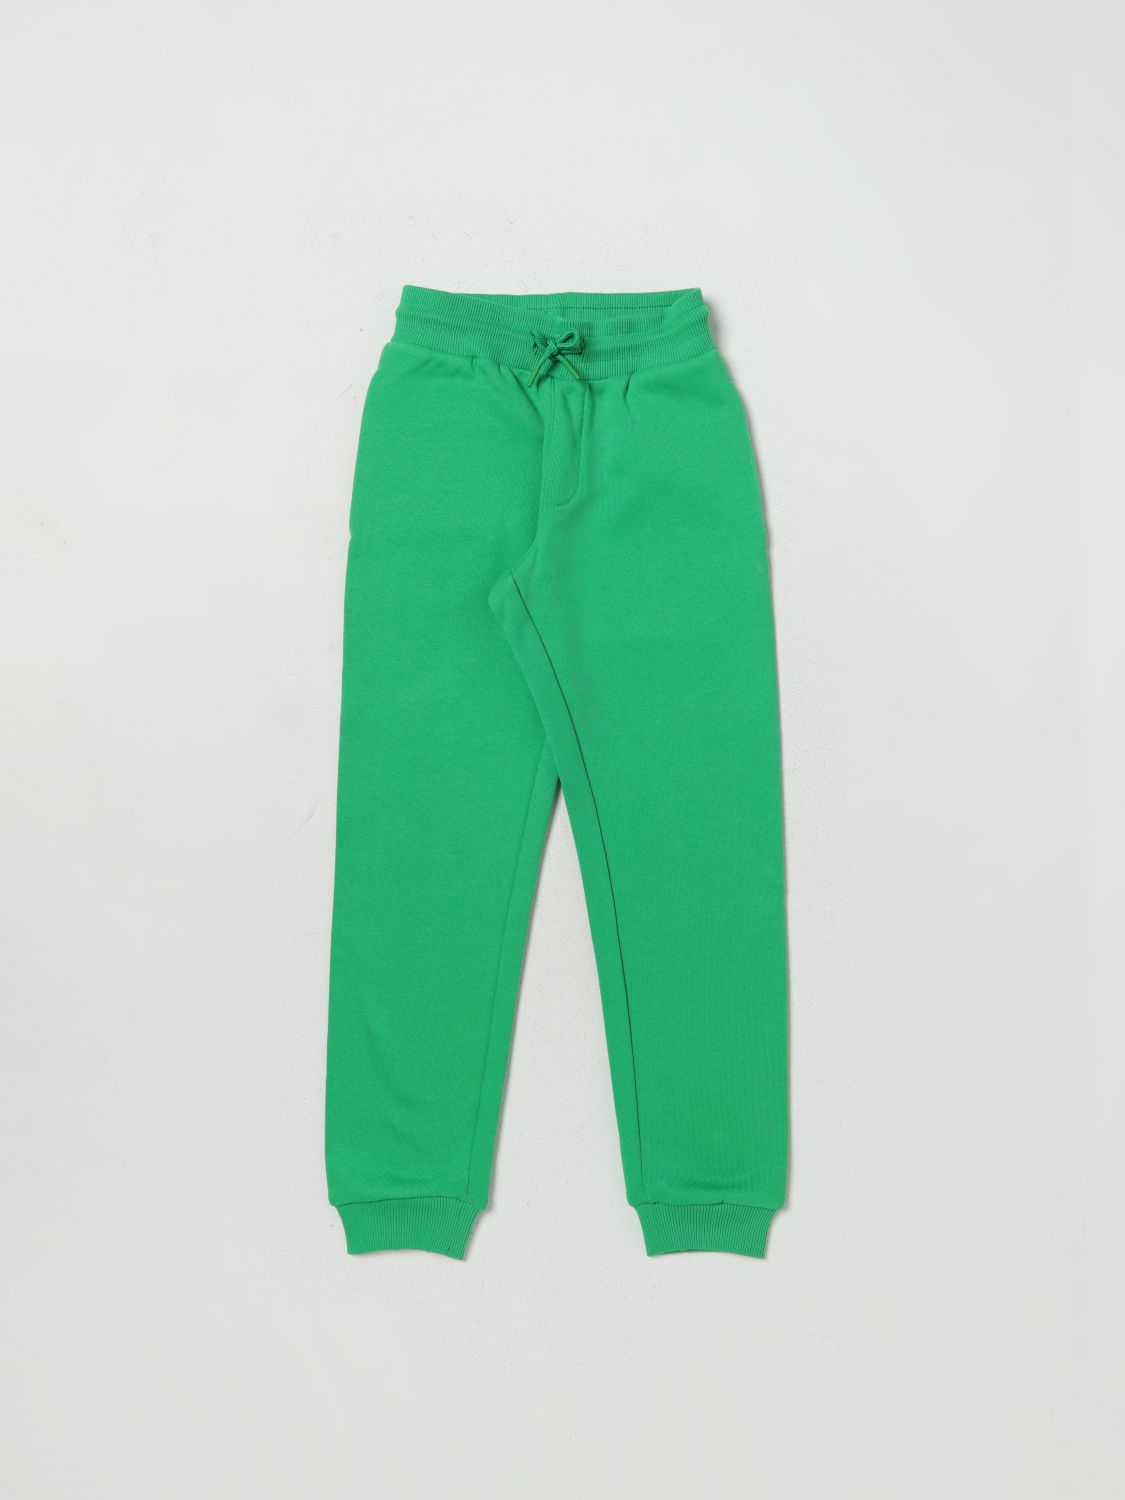 Kenzo Pants  Kids Kids Color Green